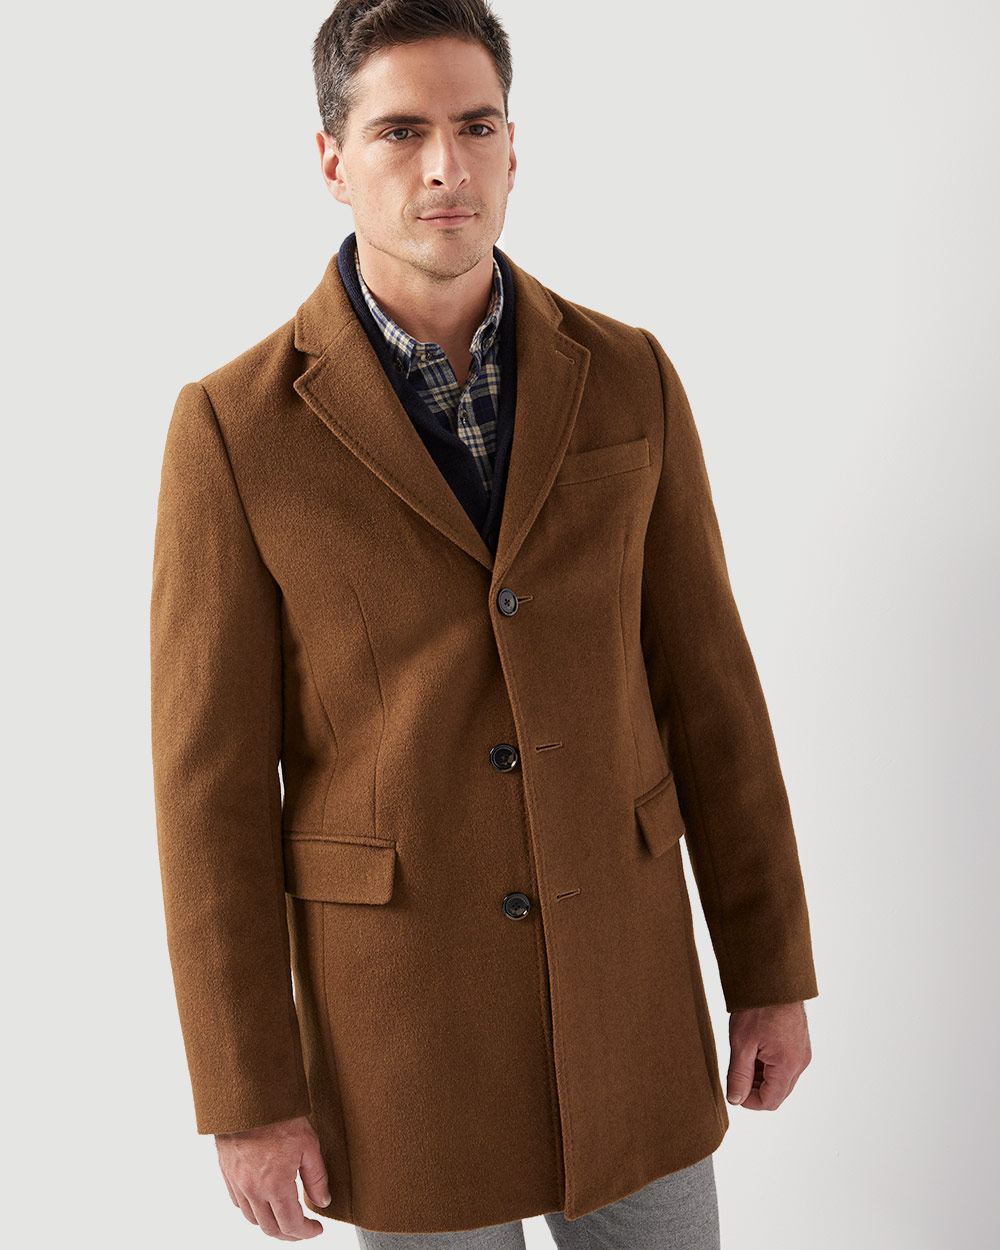 Camel brown Wool-blend top coat | RW&CO.